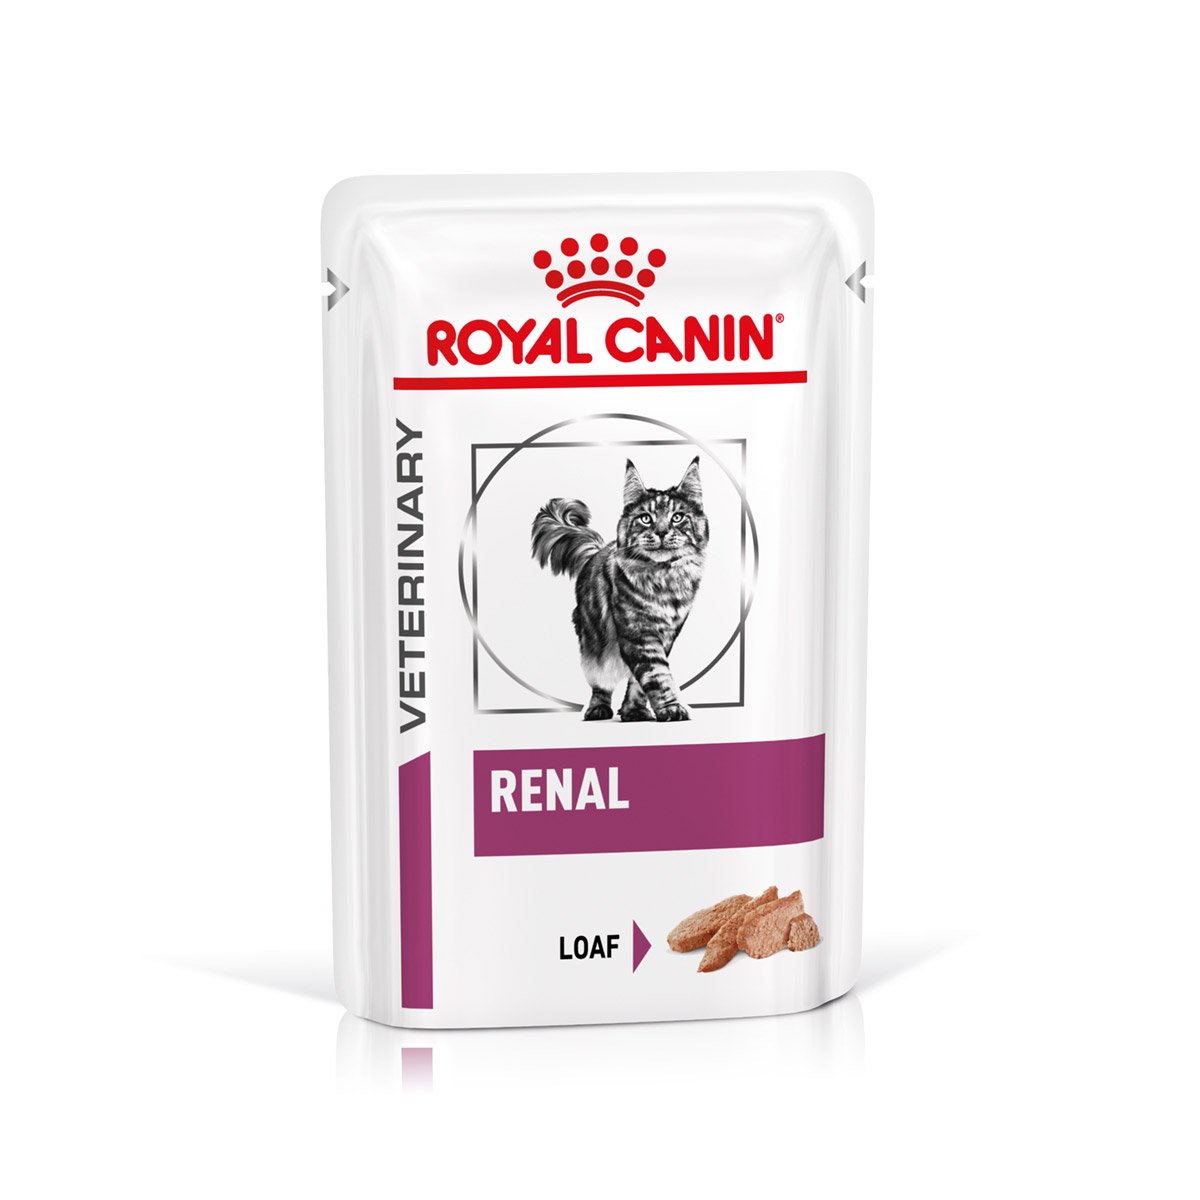 ROYAL CANIN® Veterinary RENAL Mousse Nassfutter für Katzen 12x85g von Royal Canin